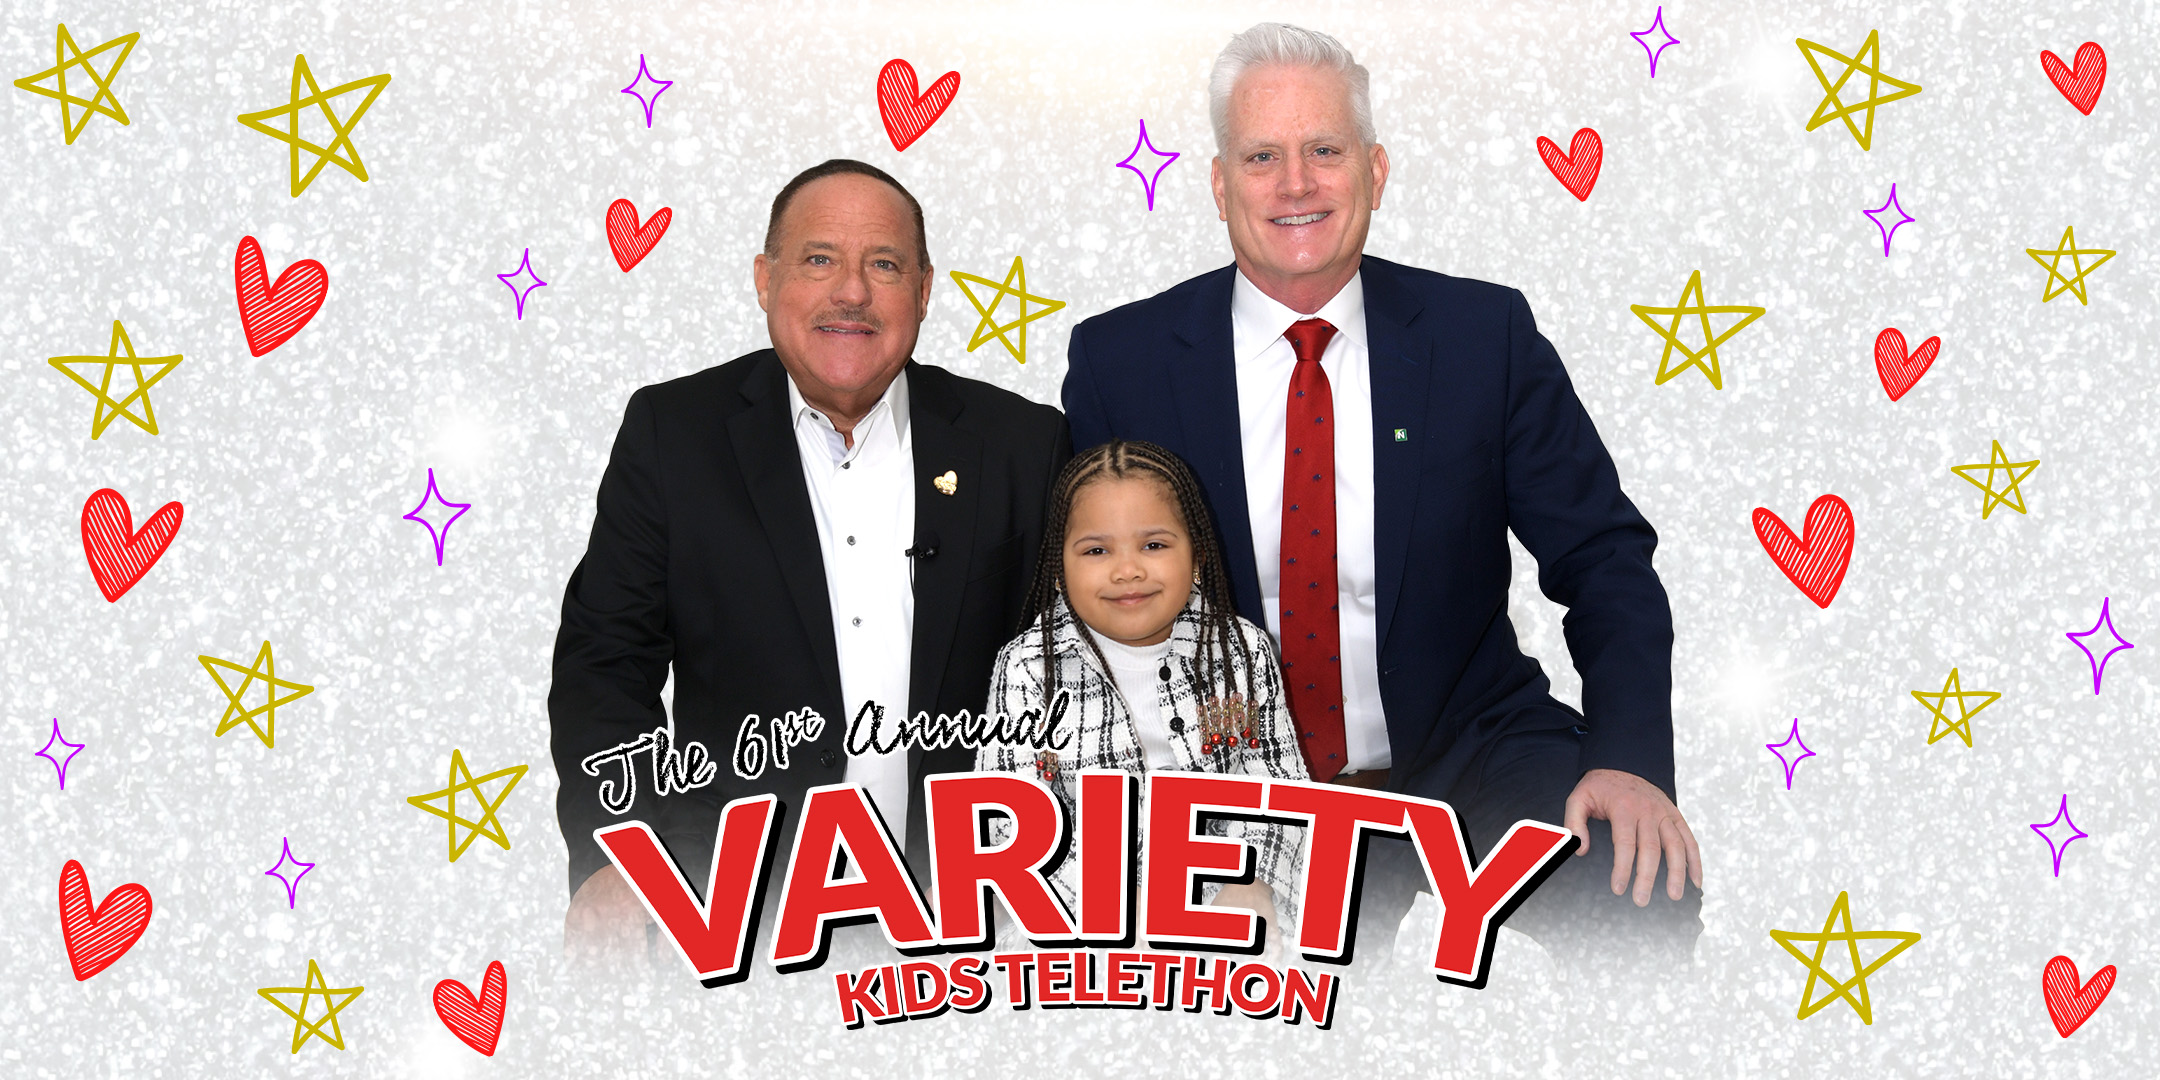 The 61st Annual Variety Kids Telethon!